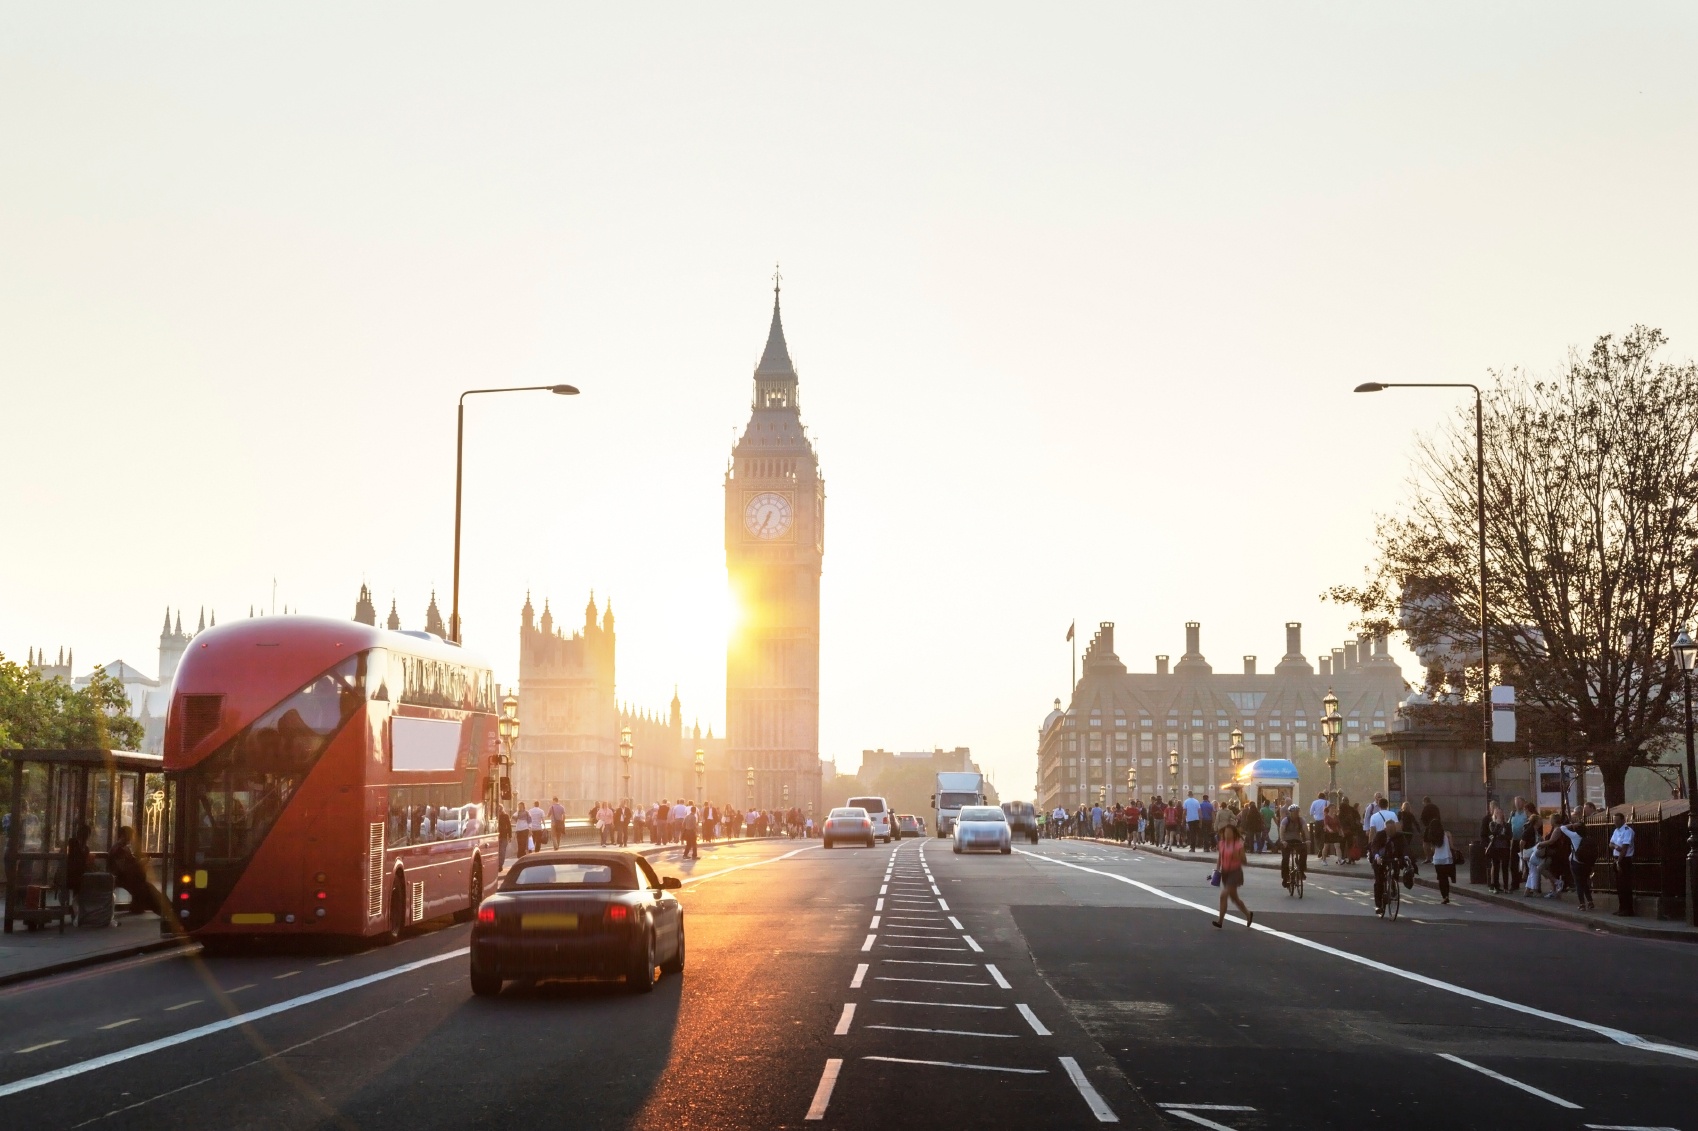 Westminster-Bridge-at-sunset-London-UK-000060726182_Medium.jpg